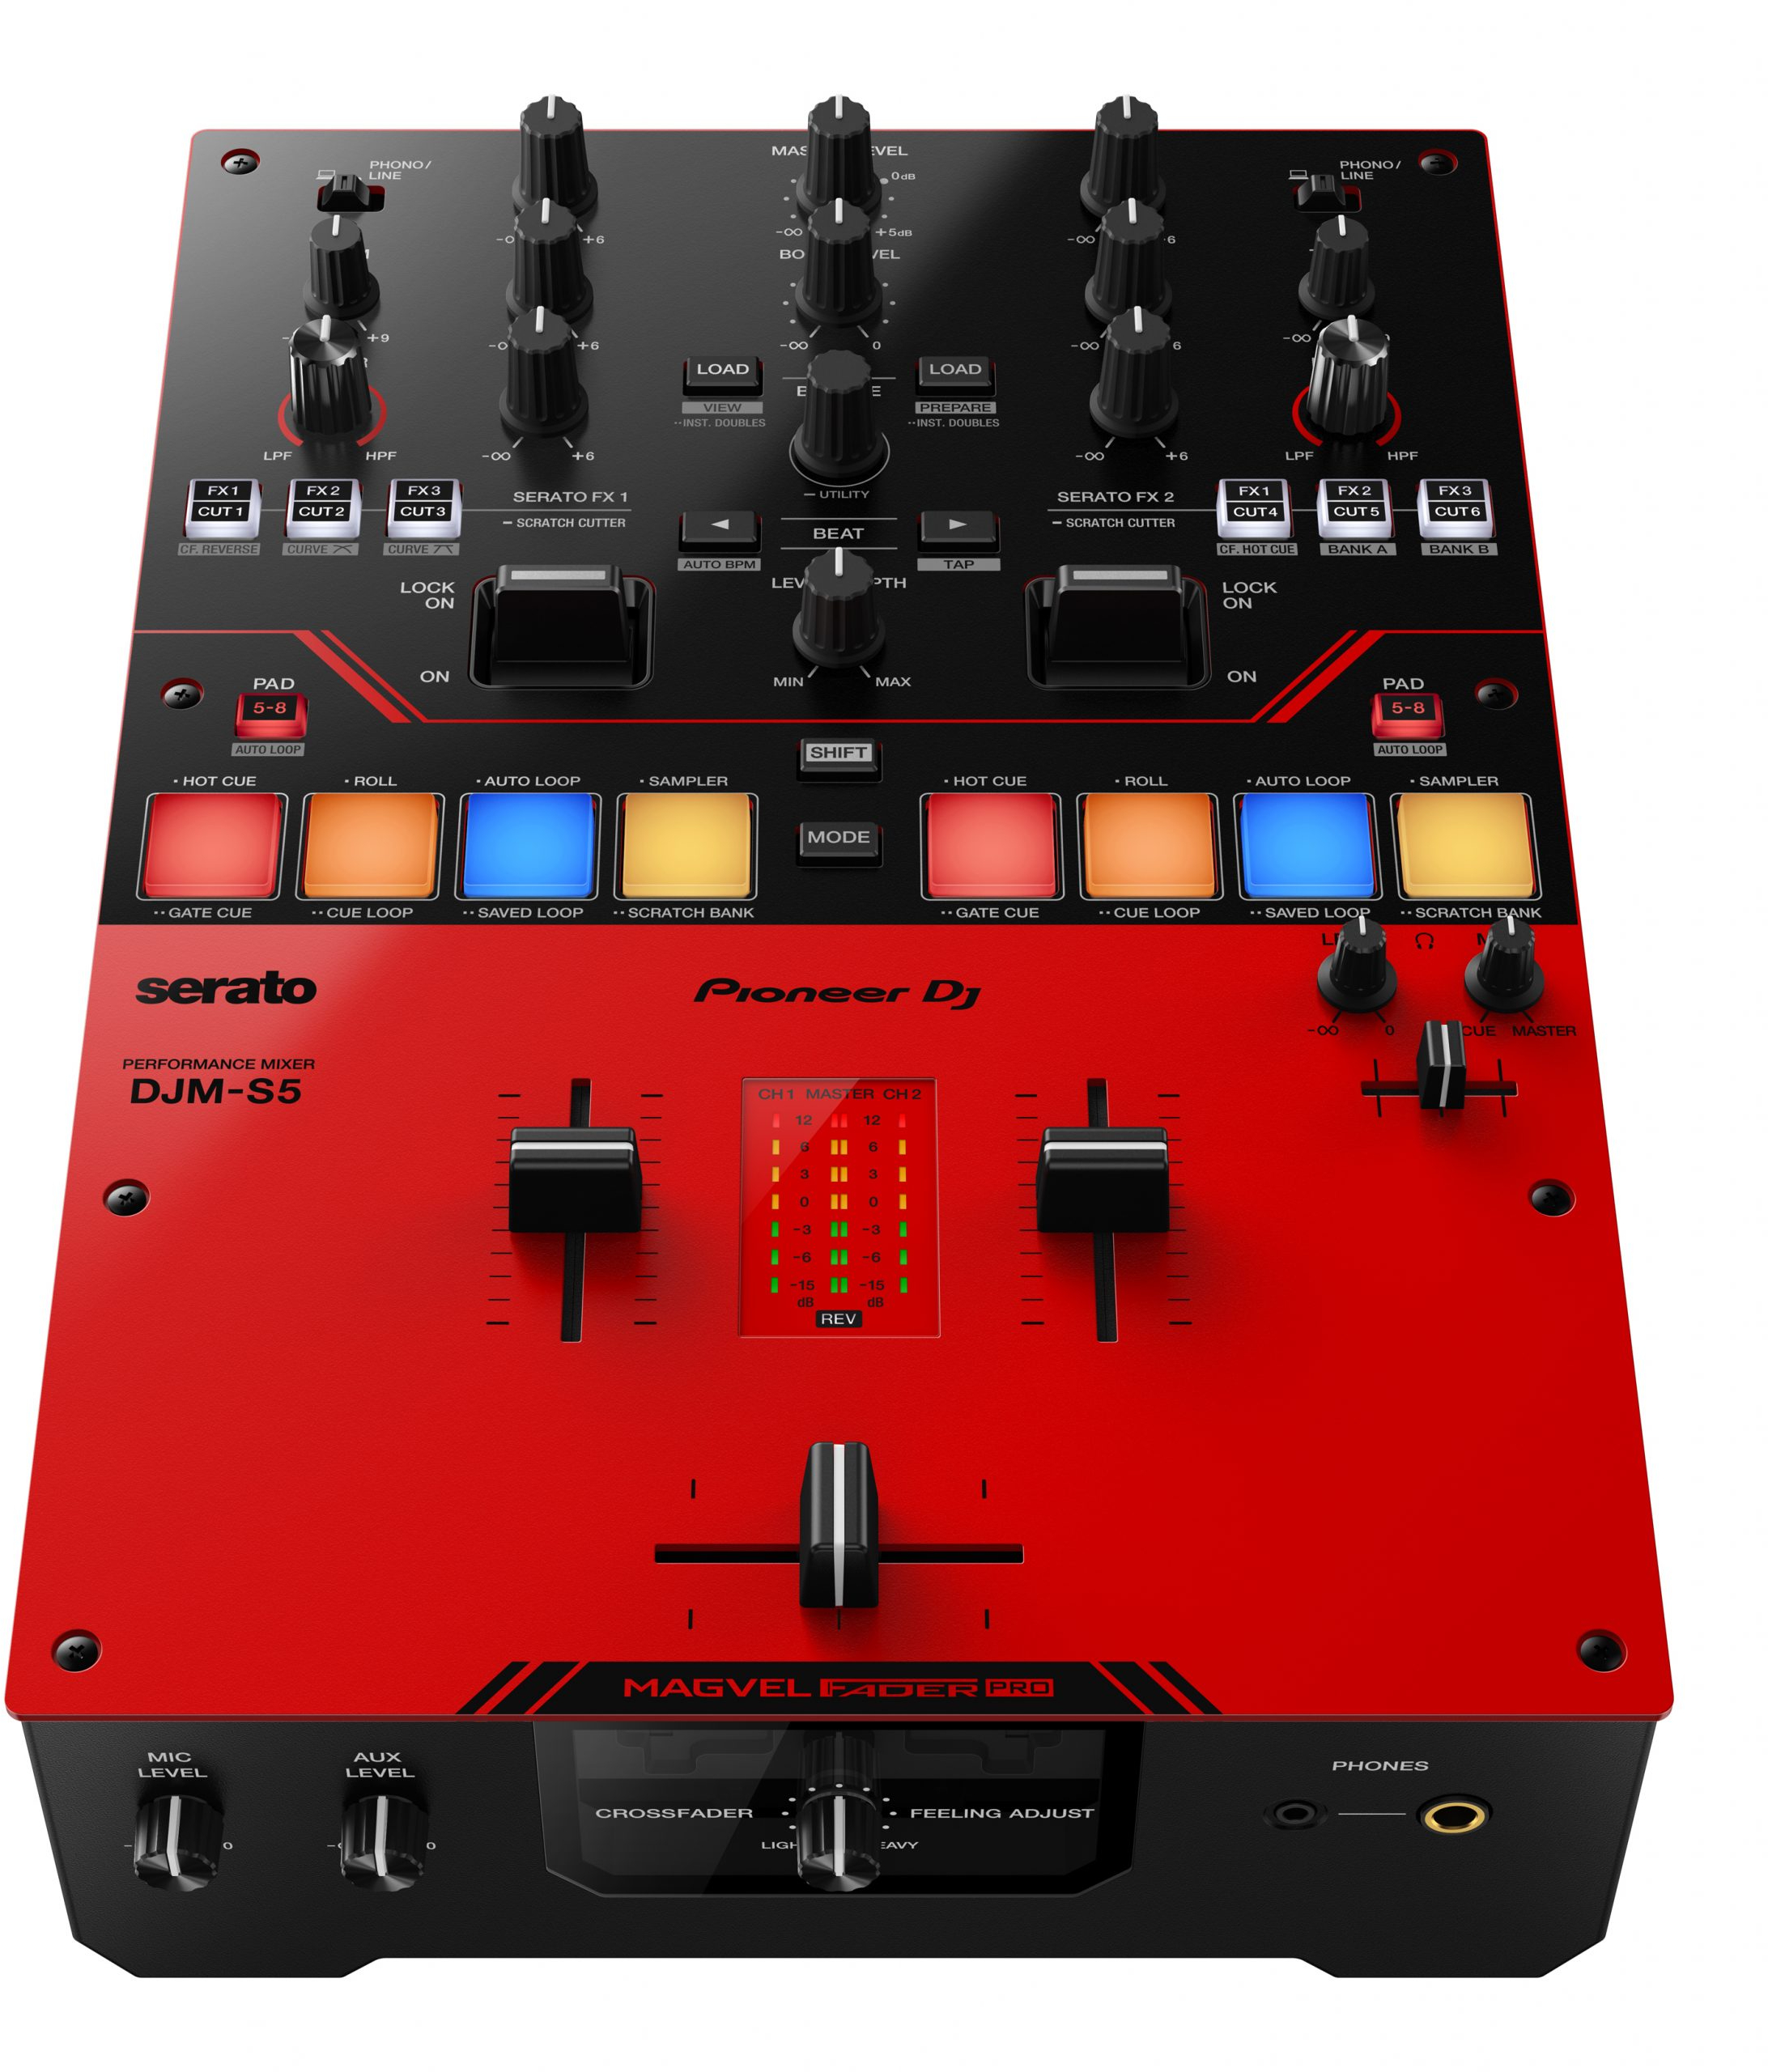 Pioneer Dj Djm S5 - DJ mixer - Variation 3